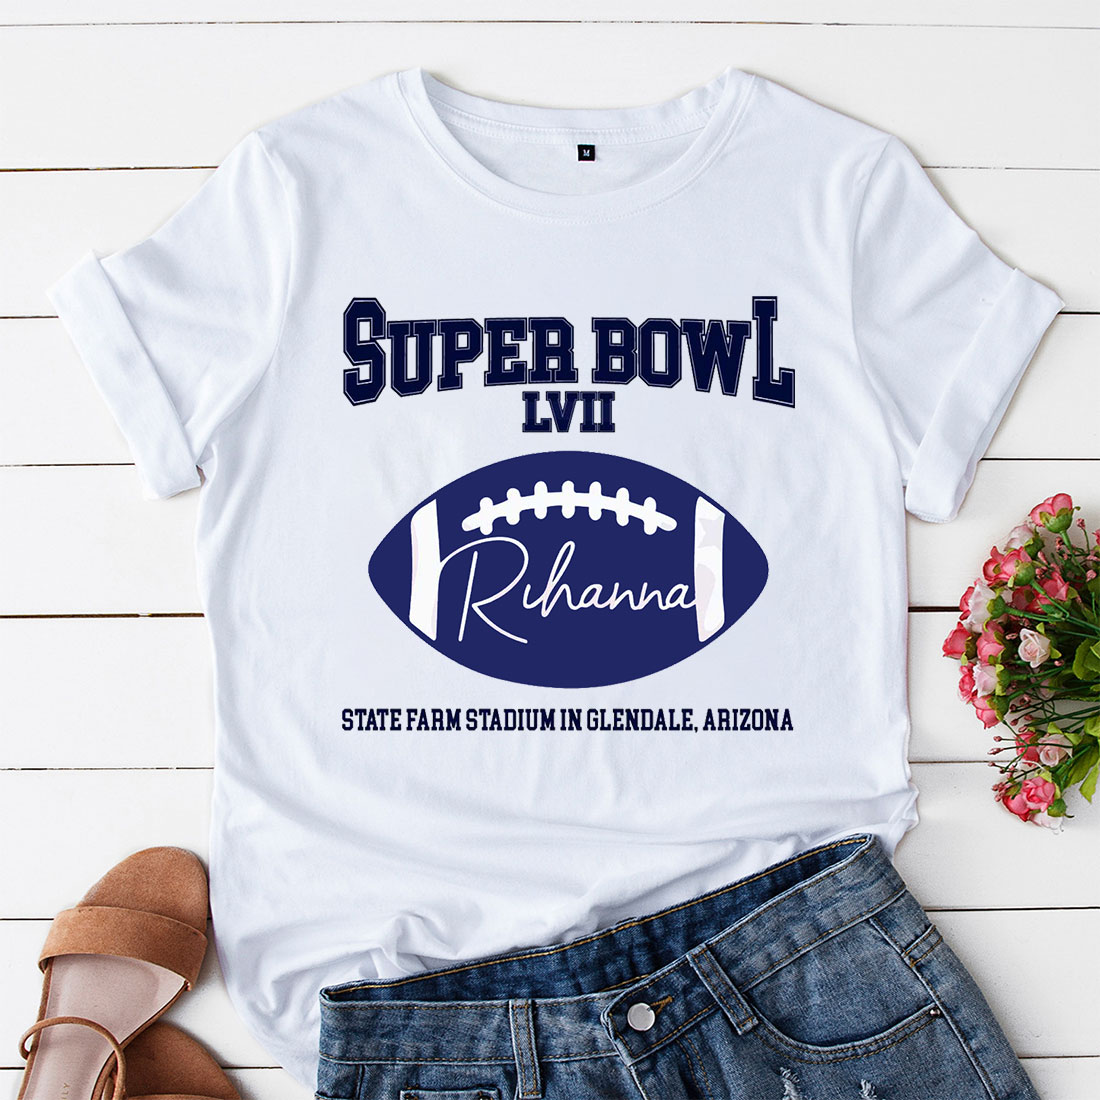 super bowl lvii rihanna state farm stadium in glendale shirt